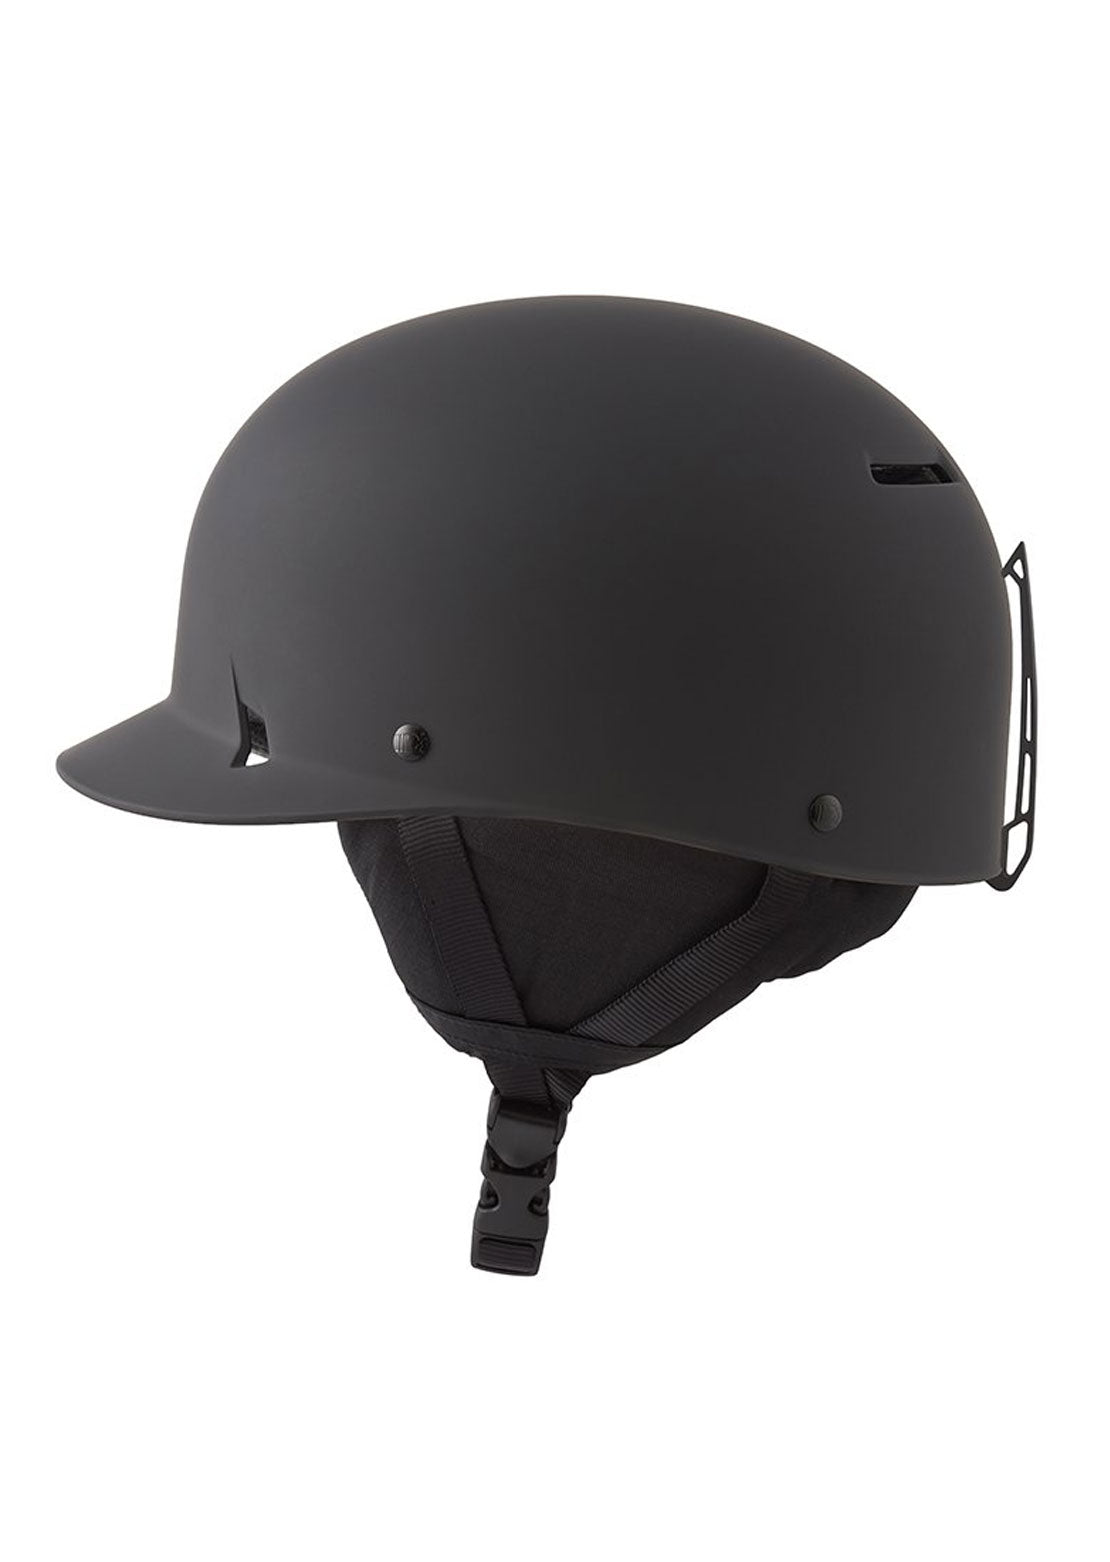 Sandbox Classic 2.0 Winter Helmet Black Matte